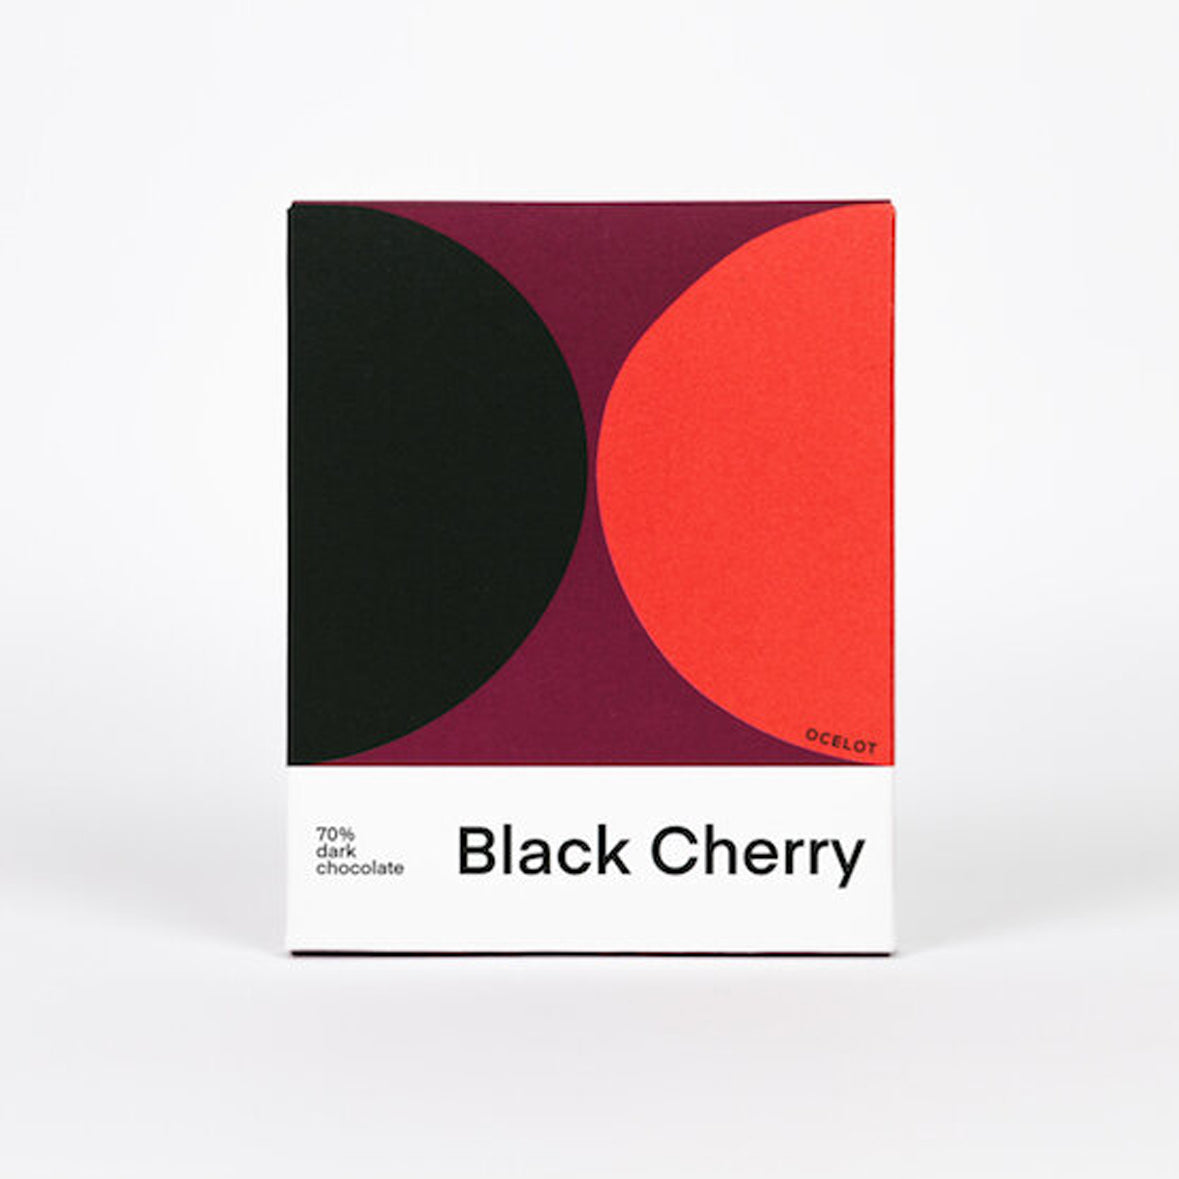 Black Cherry Chocolate by Ocelot